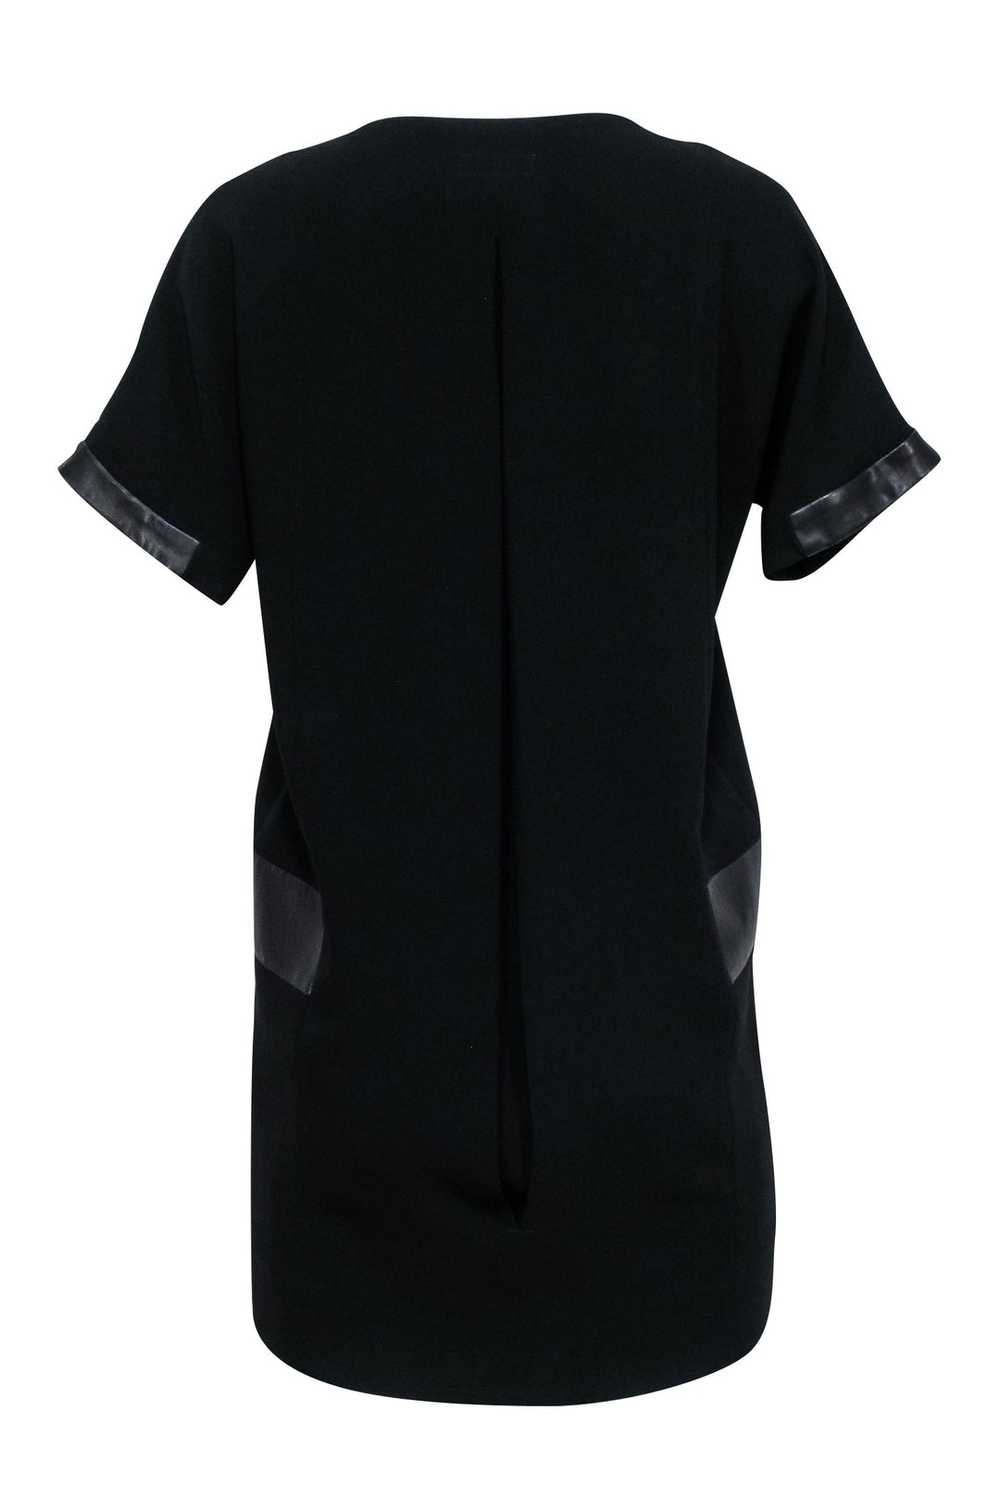 Rag & Bone - Black Shift Dress w/ Lamb Leather Tr… - image 4